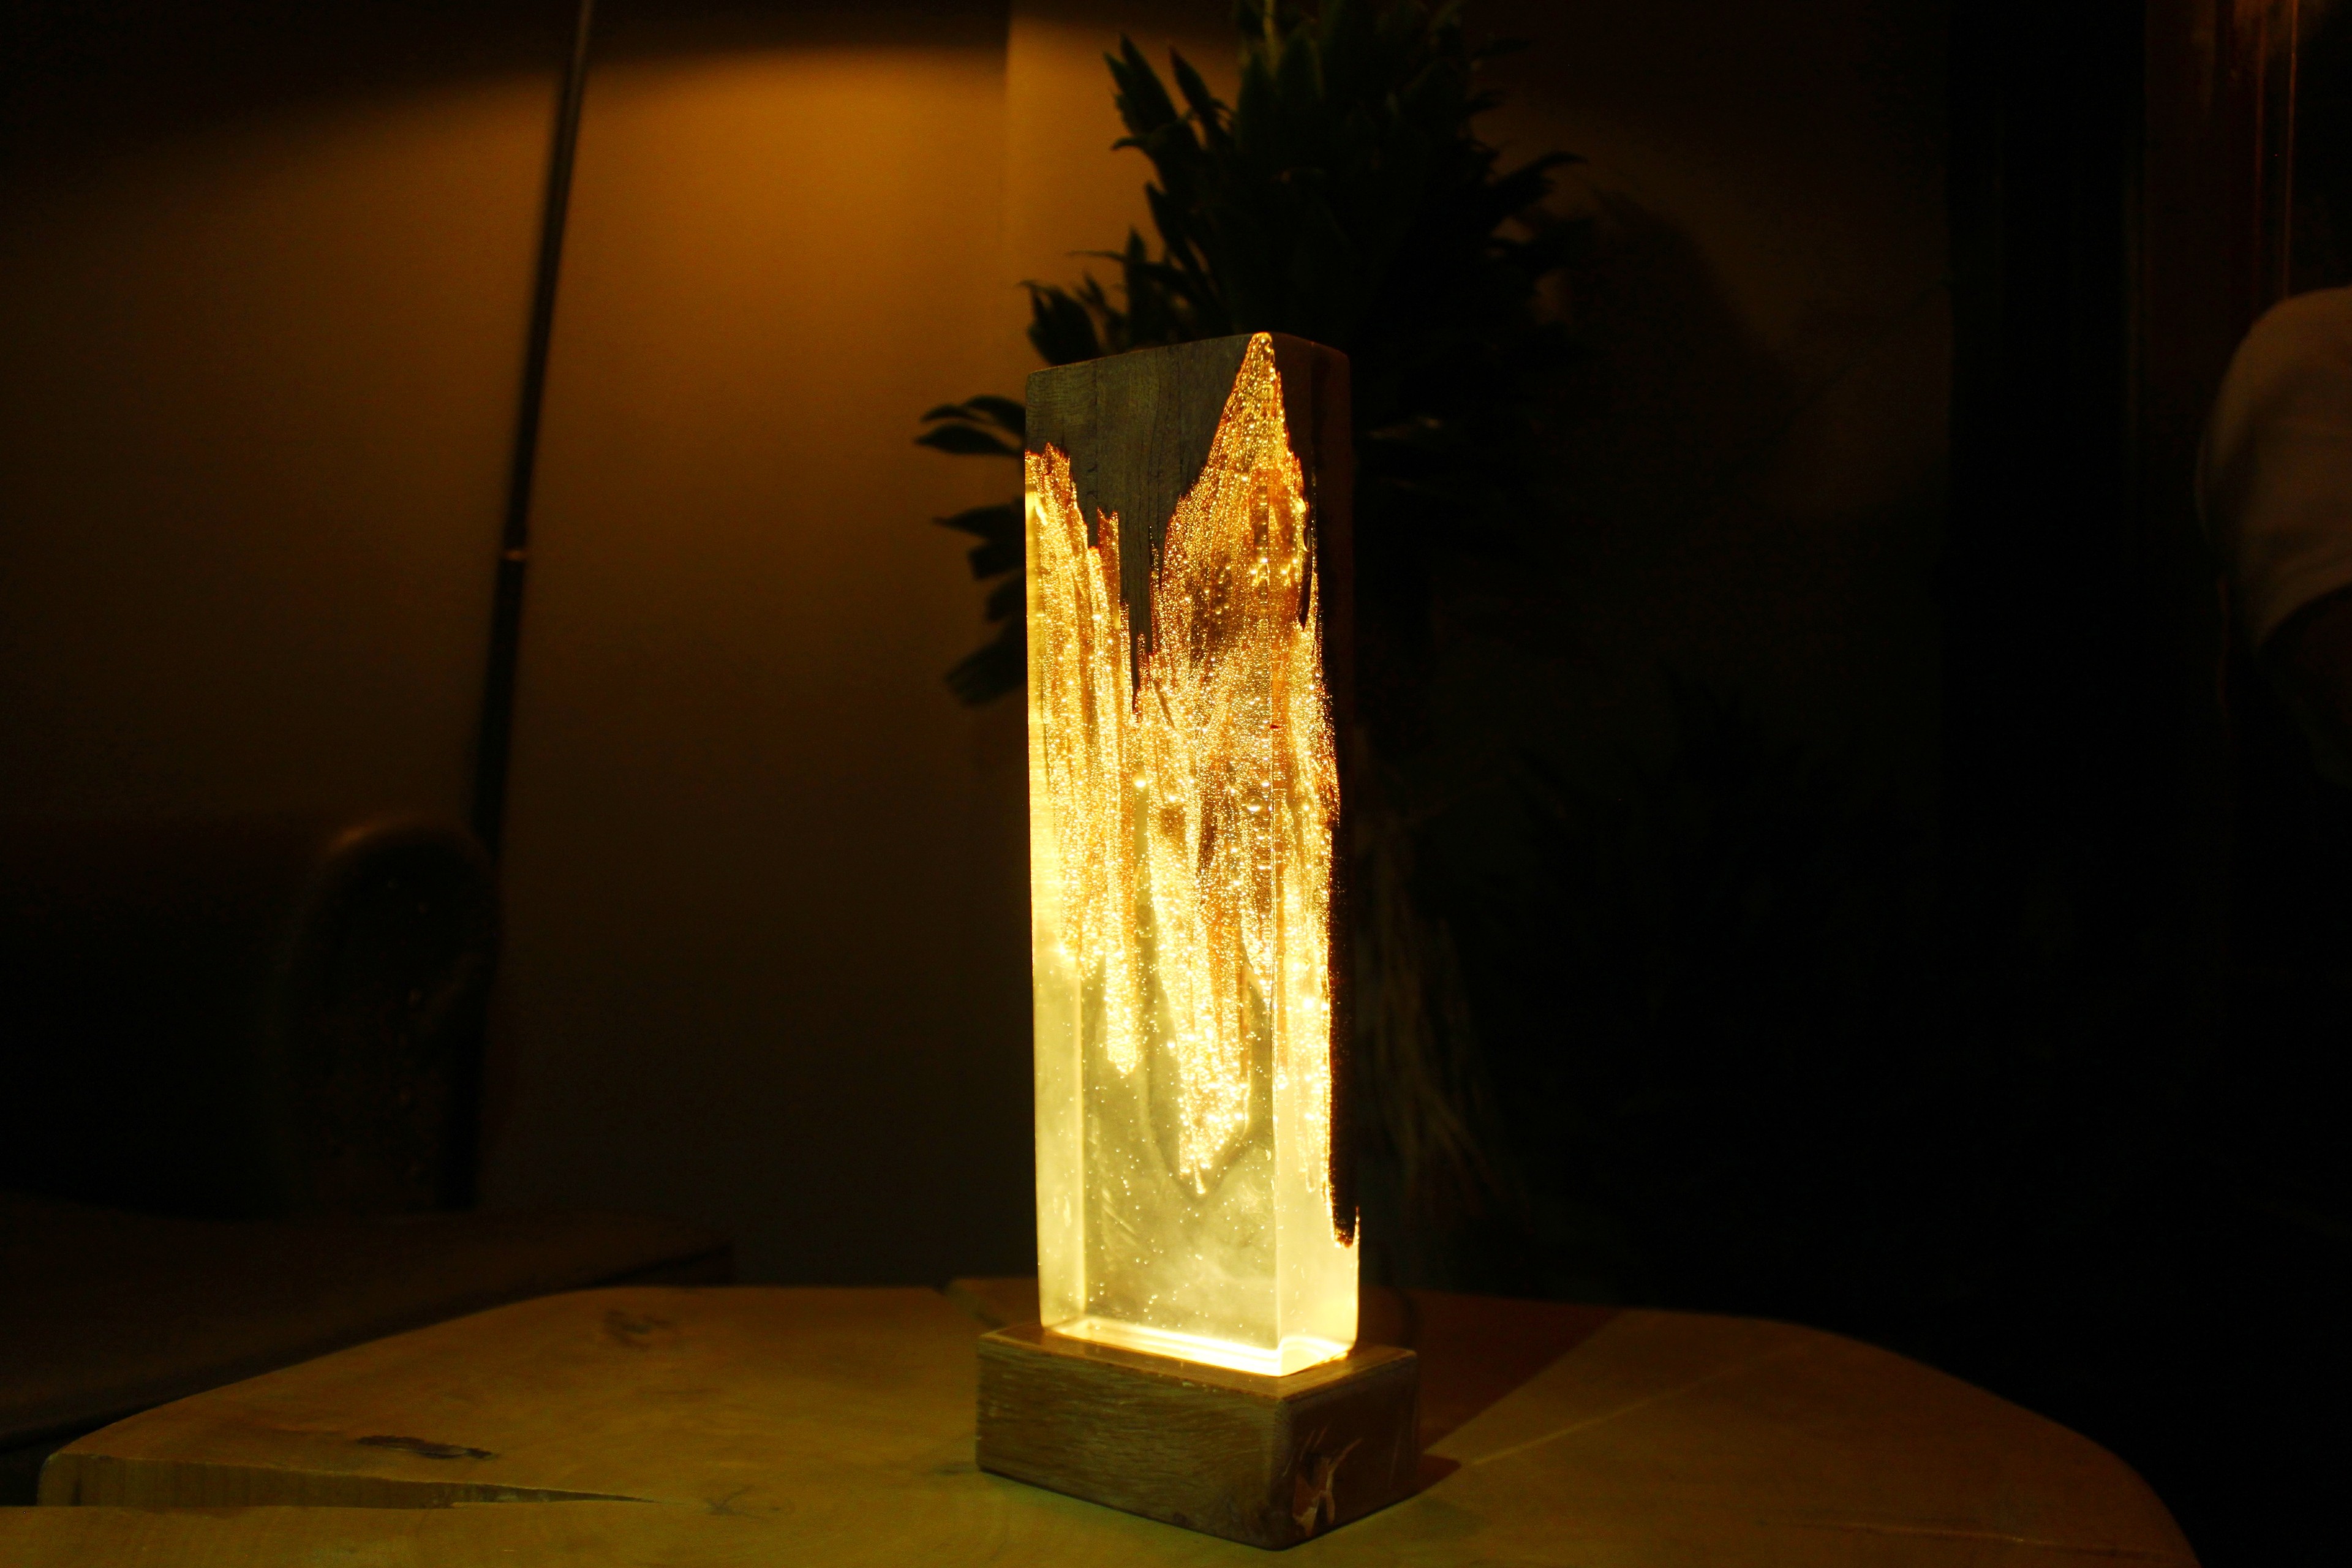 Fractured Mahogany Epoxy Resin Lamp | Wood and Resin Ambiance Nightlamp | Bedside Illumination Decor